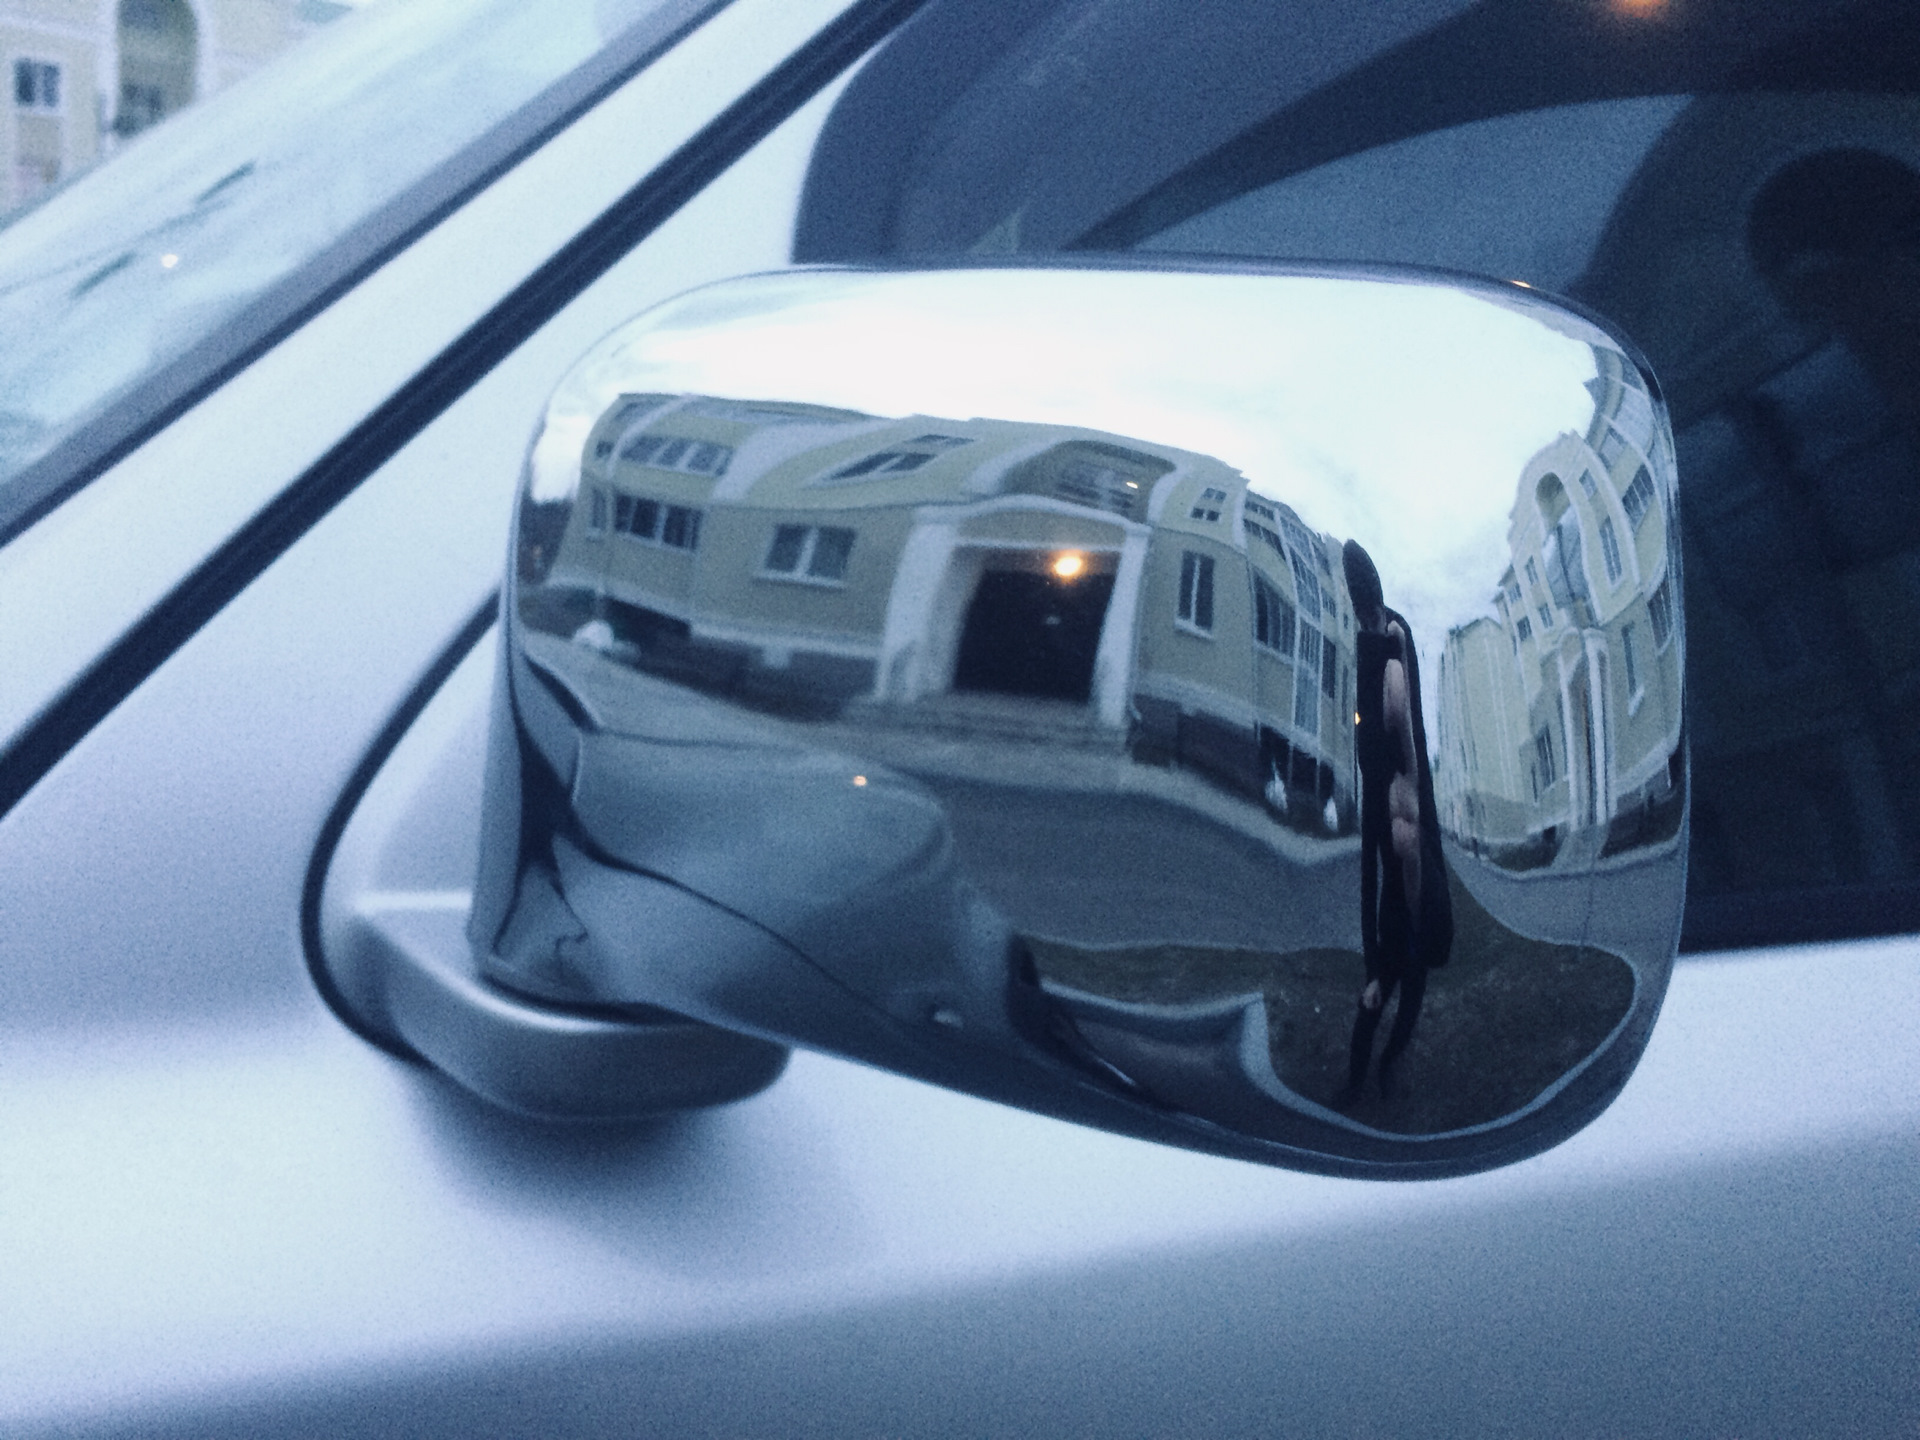 Honda cr зеркала. Хромированные накладки Honda CRV rd1. Хром-накладки CR-V rd1. Хром накладки зеркал Honda CR-V 2003. Honda crv1 накладки на зеркала.